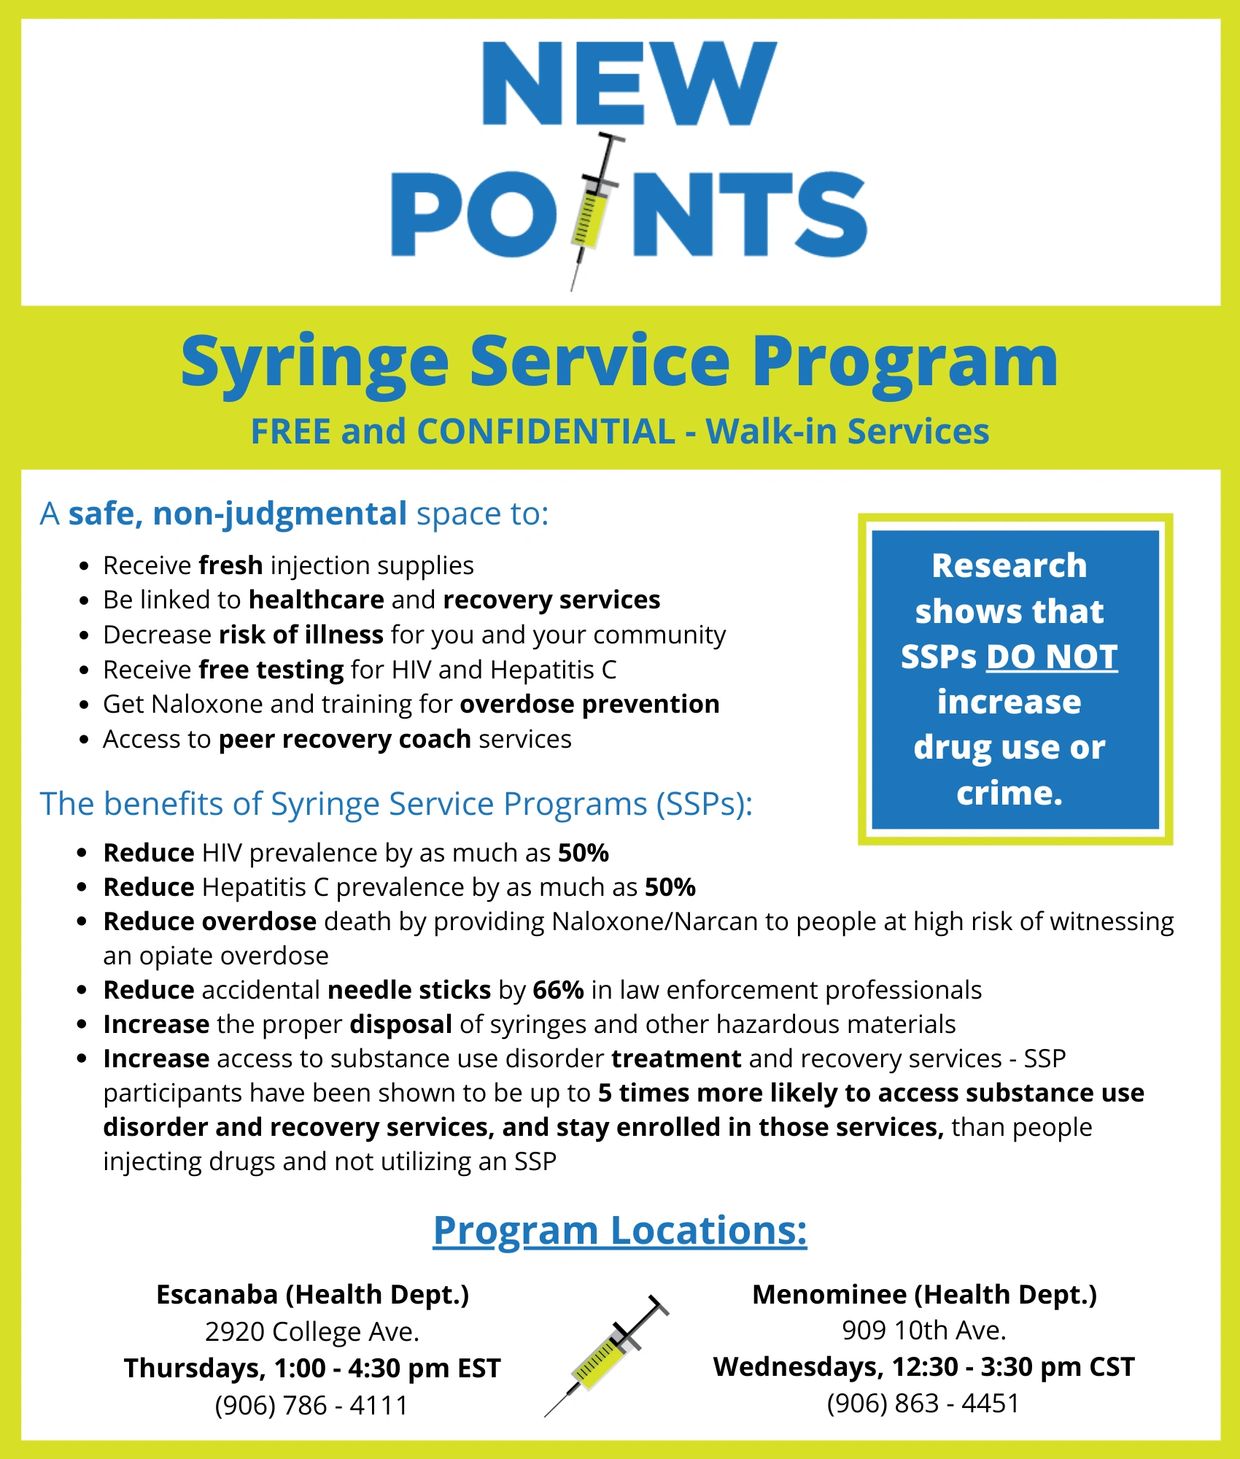 New Points Syringe Service Program Escanaba Thursdays 1-4pm, Menominee Wednesdays 12:30-3:30pm CST.